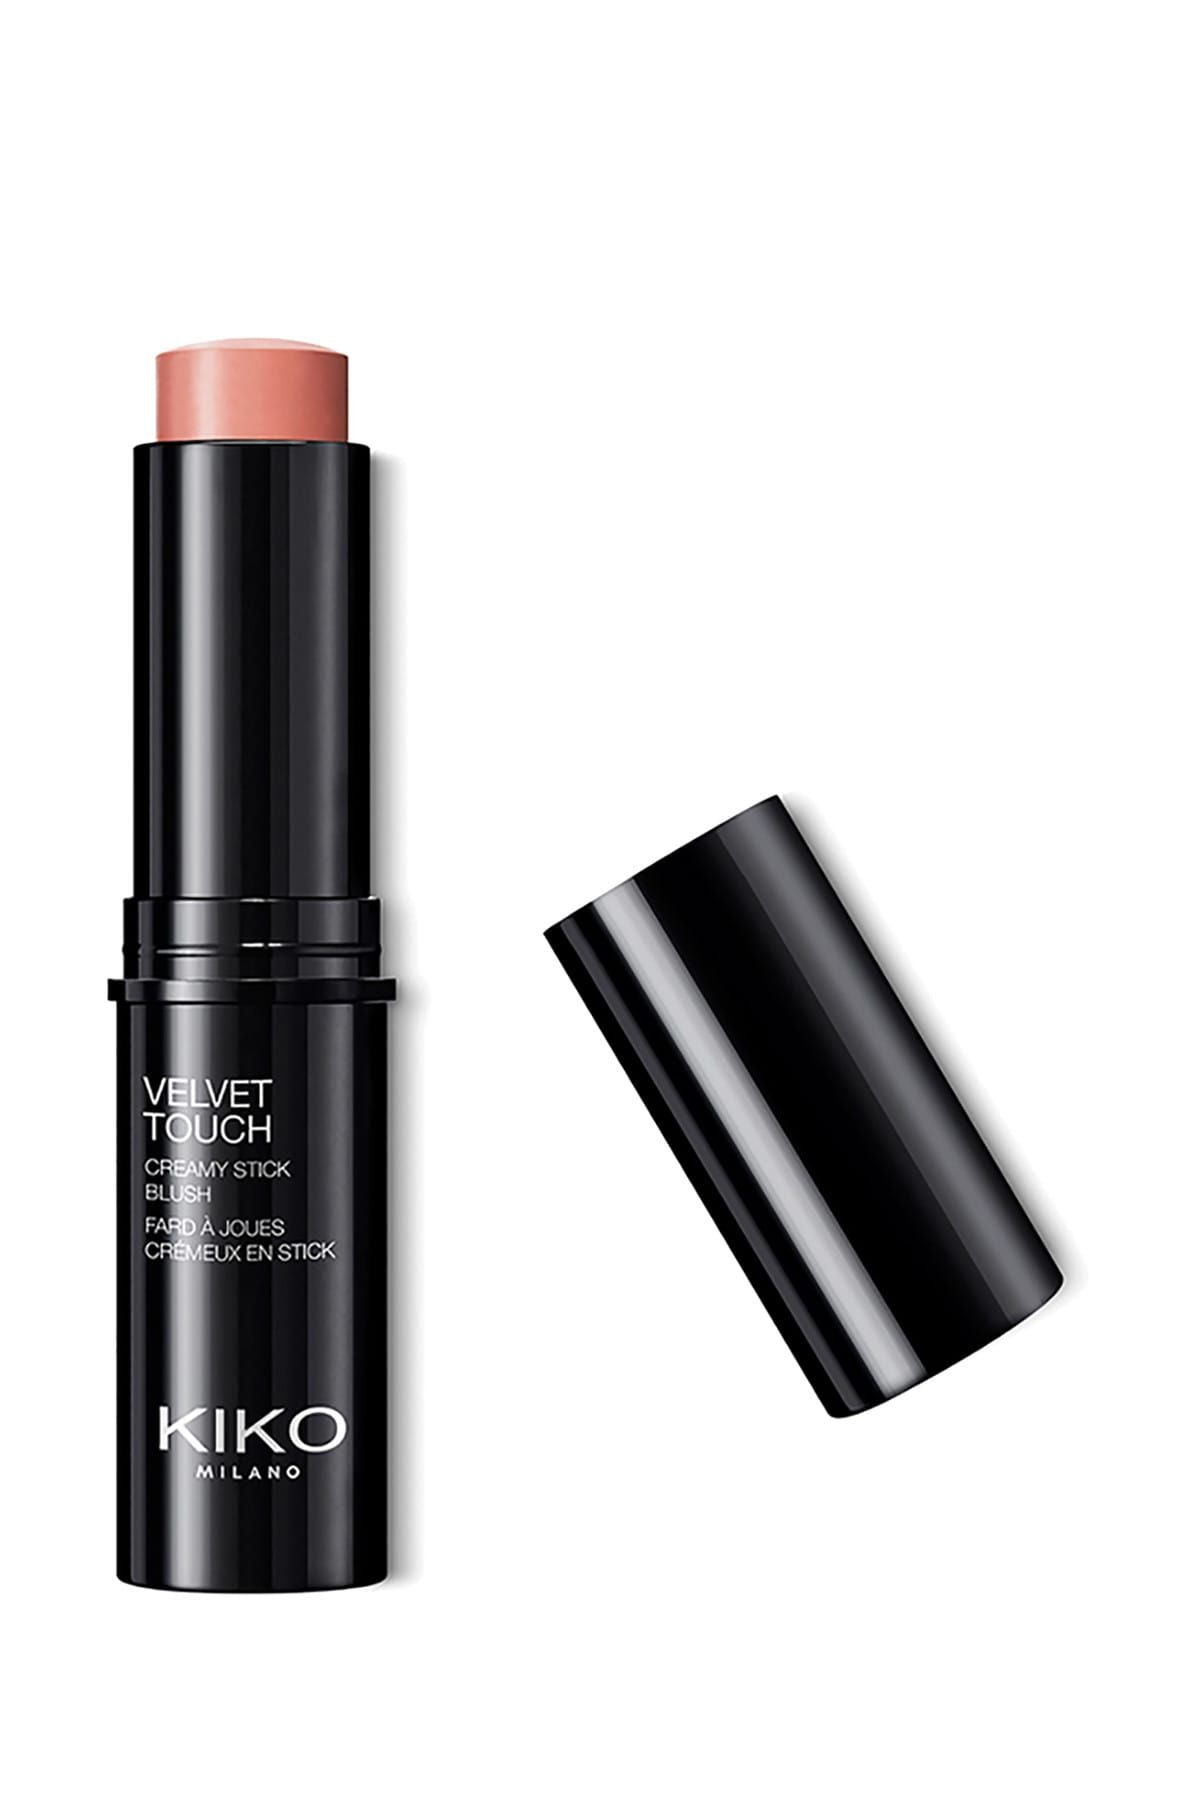 KIKO Stick Allık - Velvet Touch Creamy Stick Blush 01 Golden Sand 10 g 8025272604901